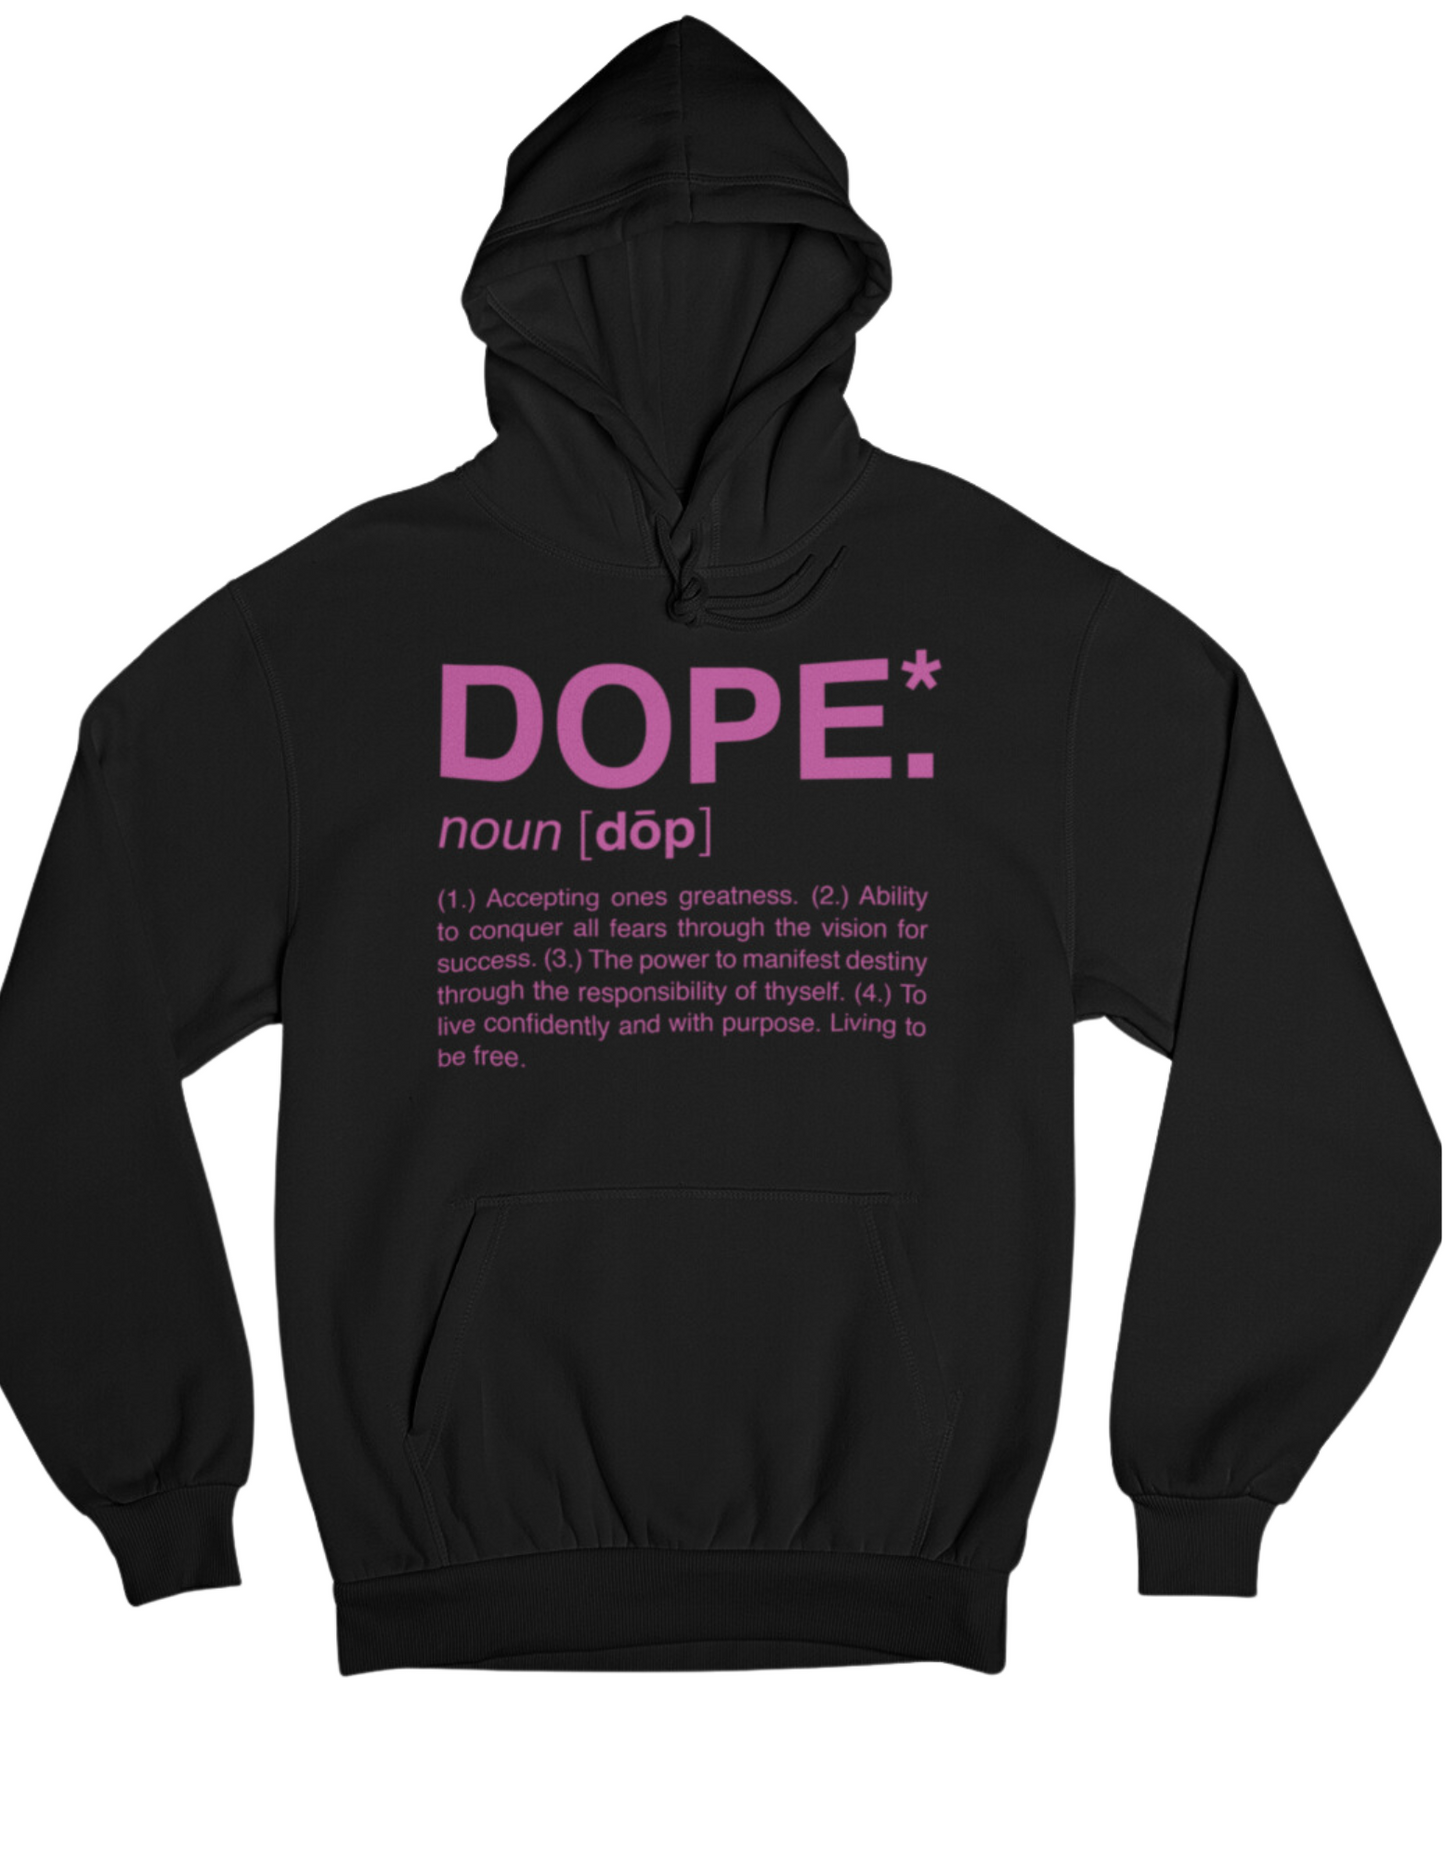 Dope Hoodie (Black/Pink) - Limited Edition